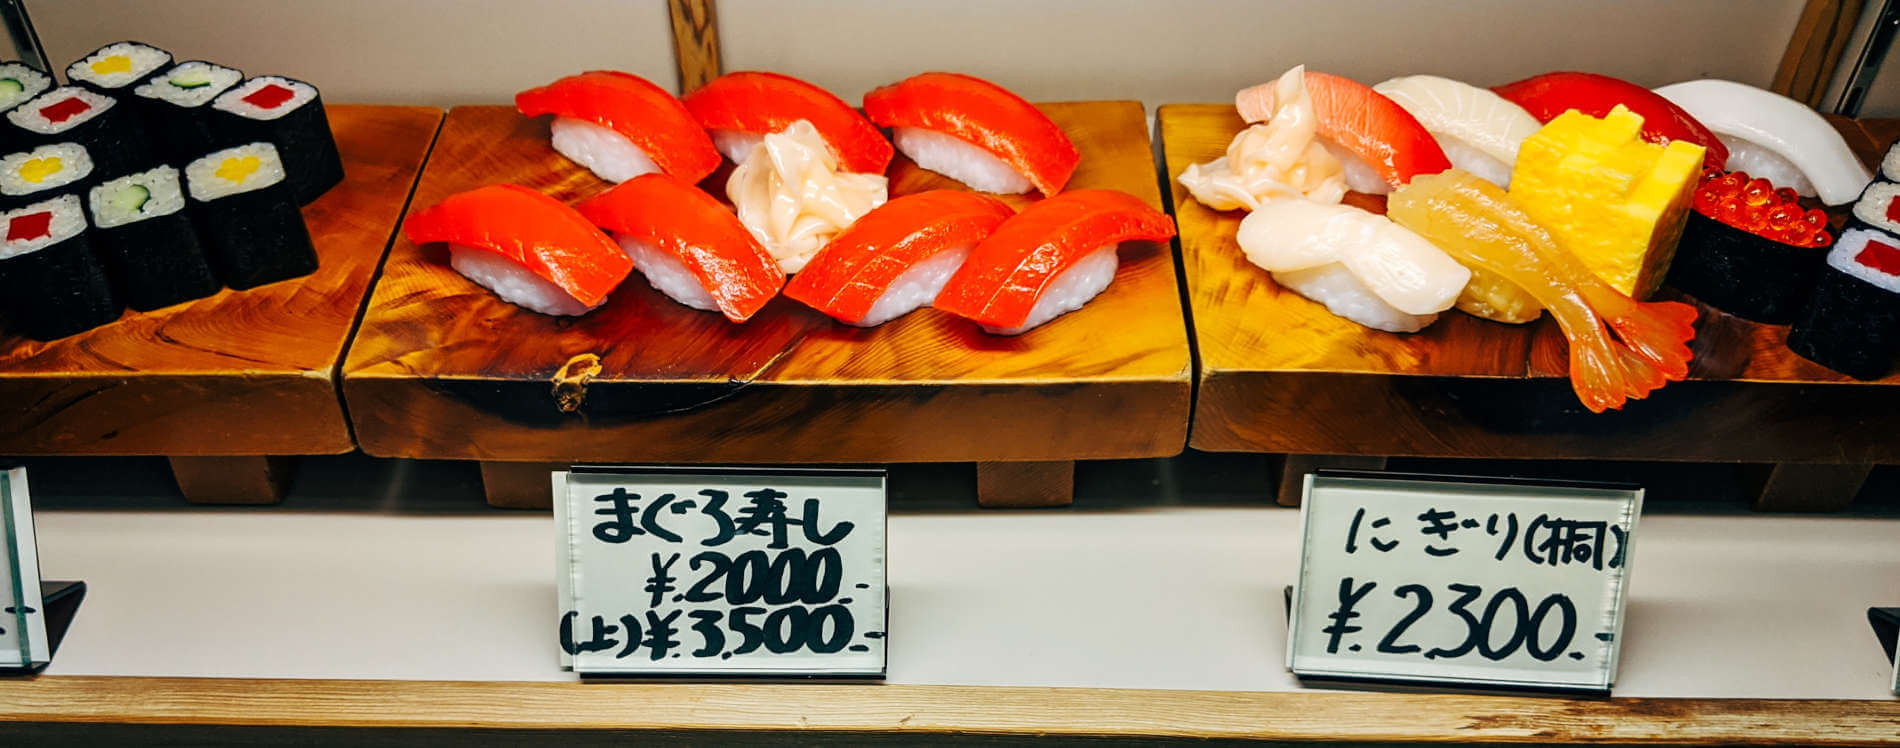 Sushi als japanisches Kunstessen